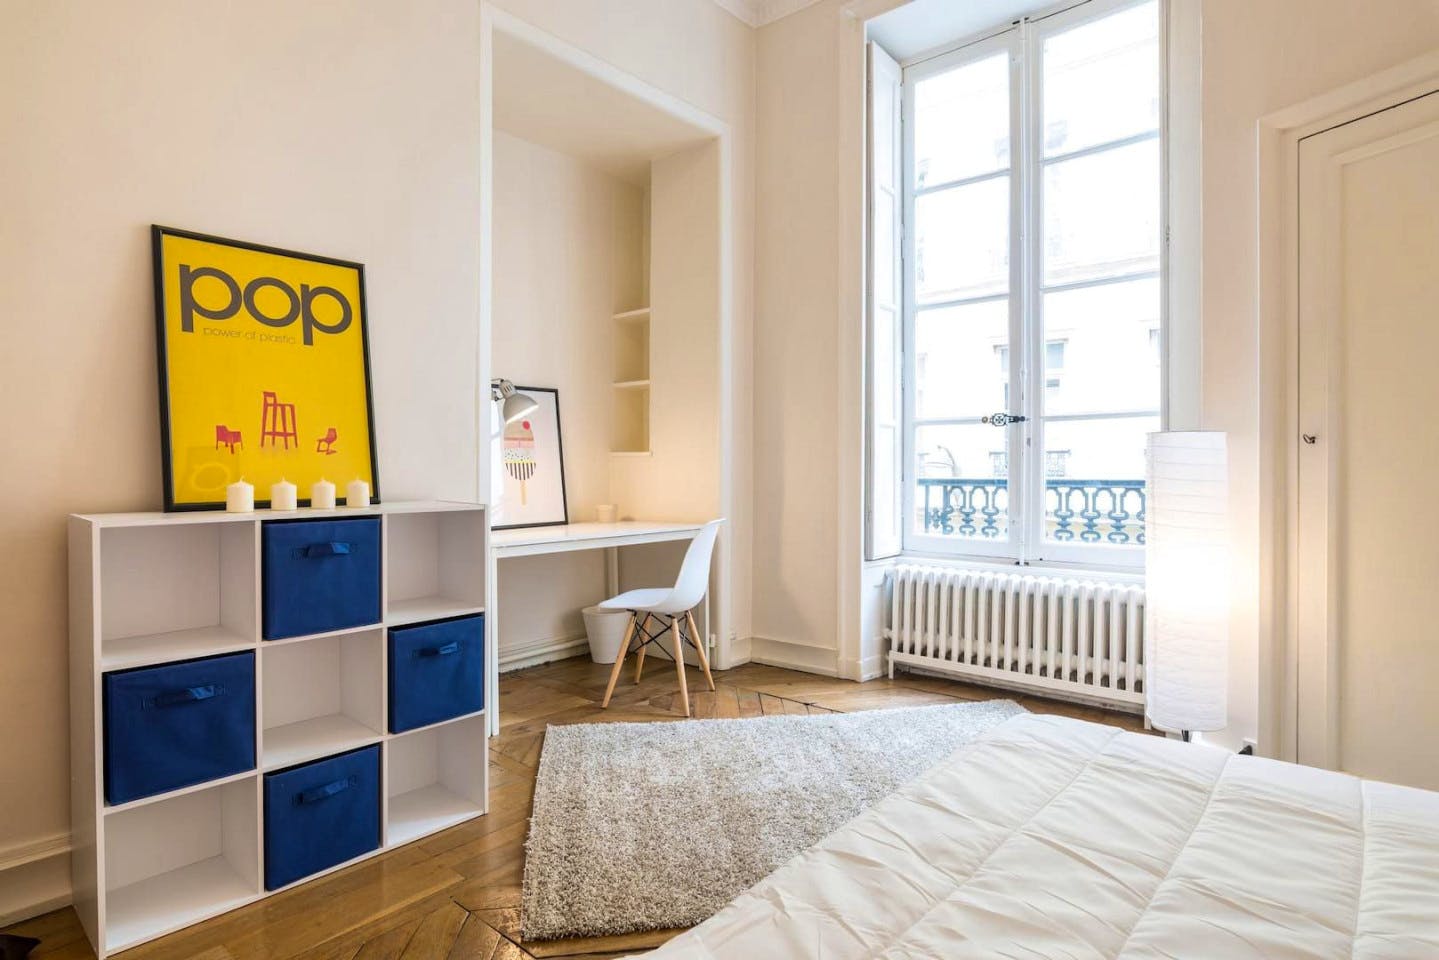 6-Bed Apartment on Rue Vaubecour